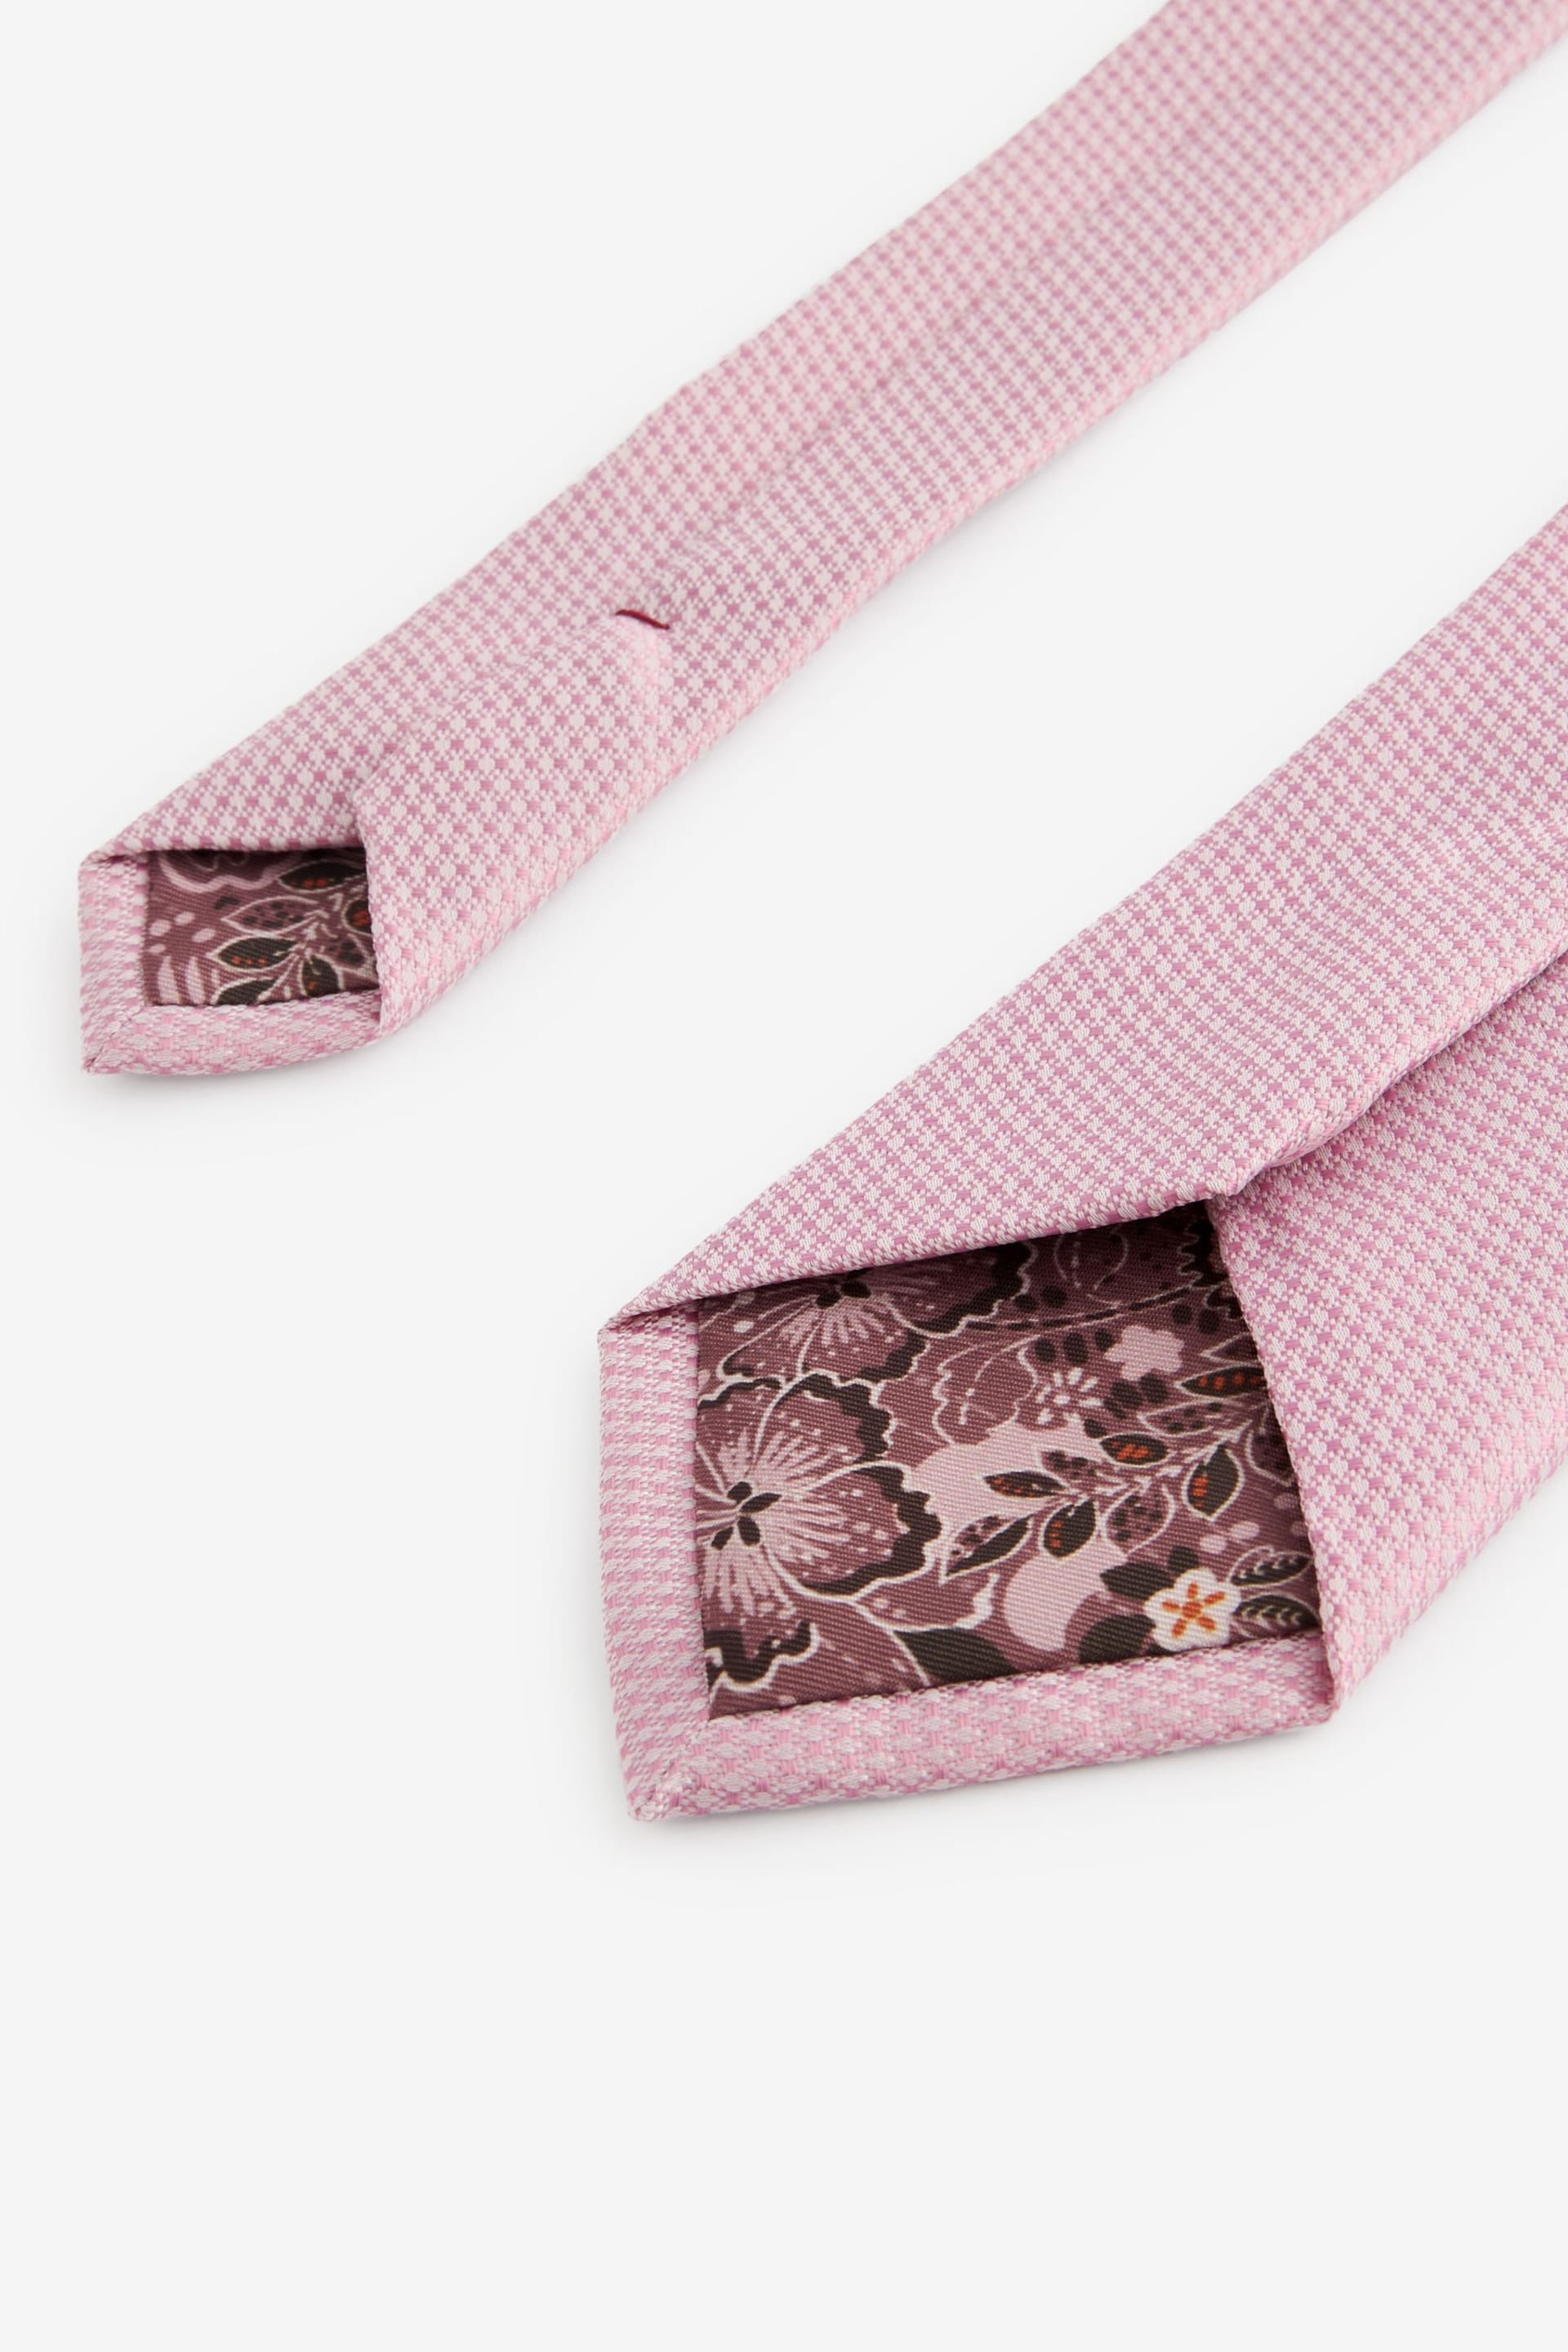 Pink Floral Tie And Pocket Square Set - Image 3 of 5